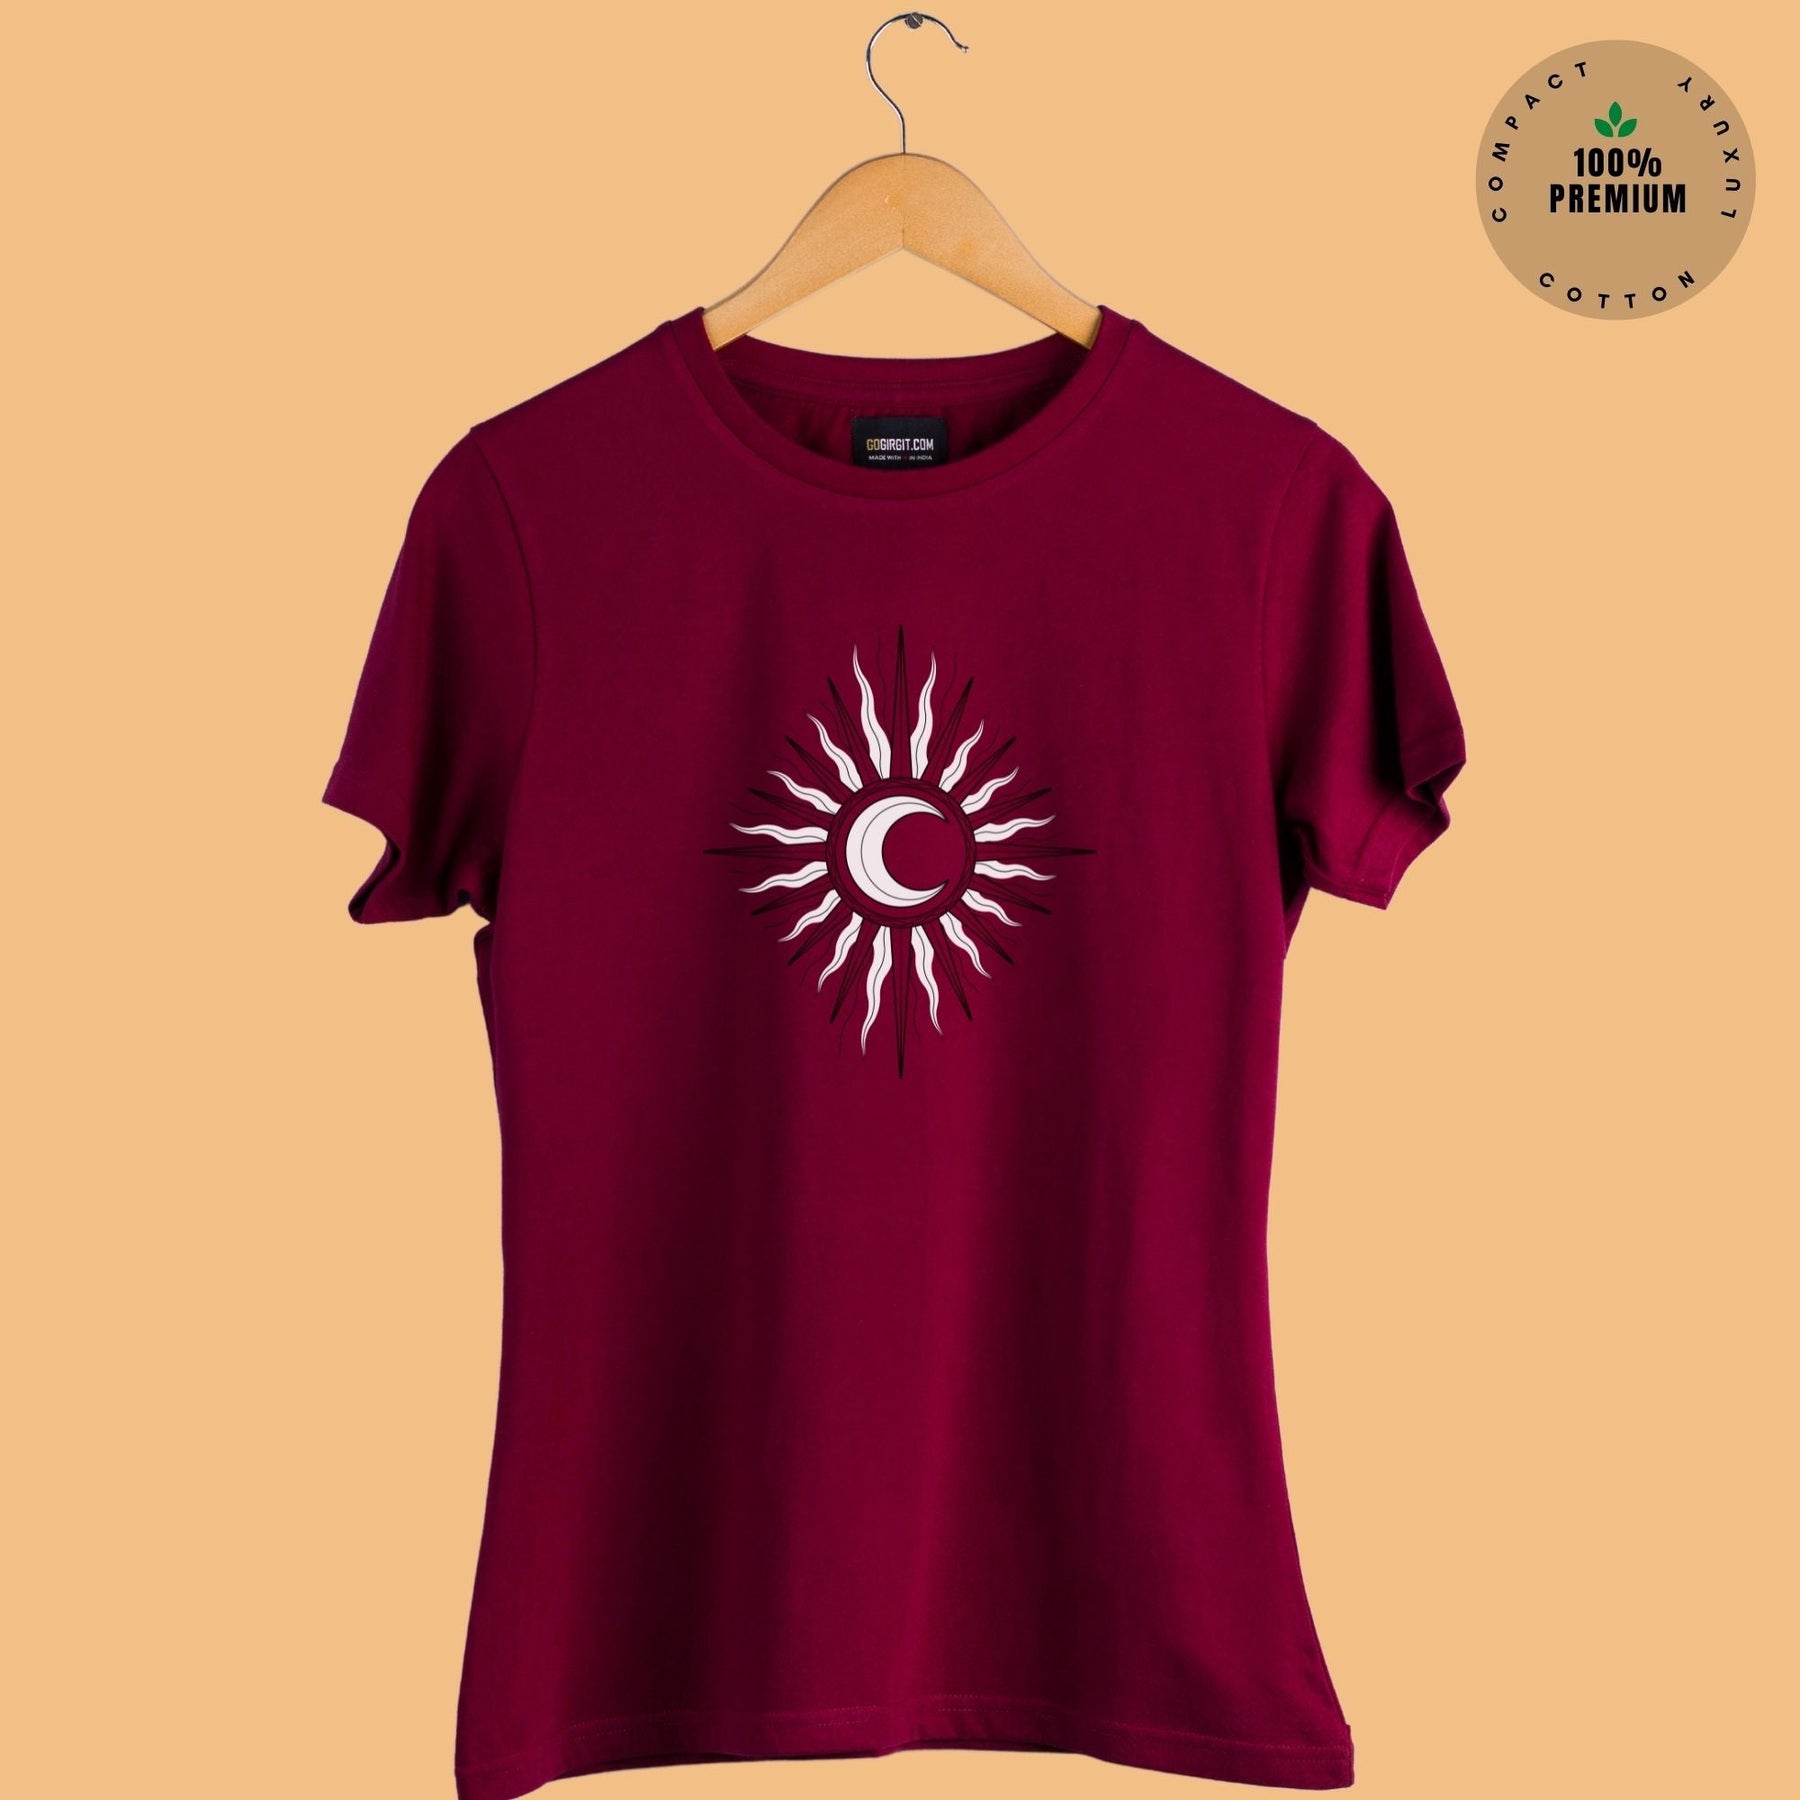 Printed-premium-cotton-women-s-round-neck-sun-moon-maroon-half-sleeve-t-shirt-gogirgit